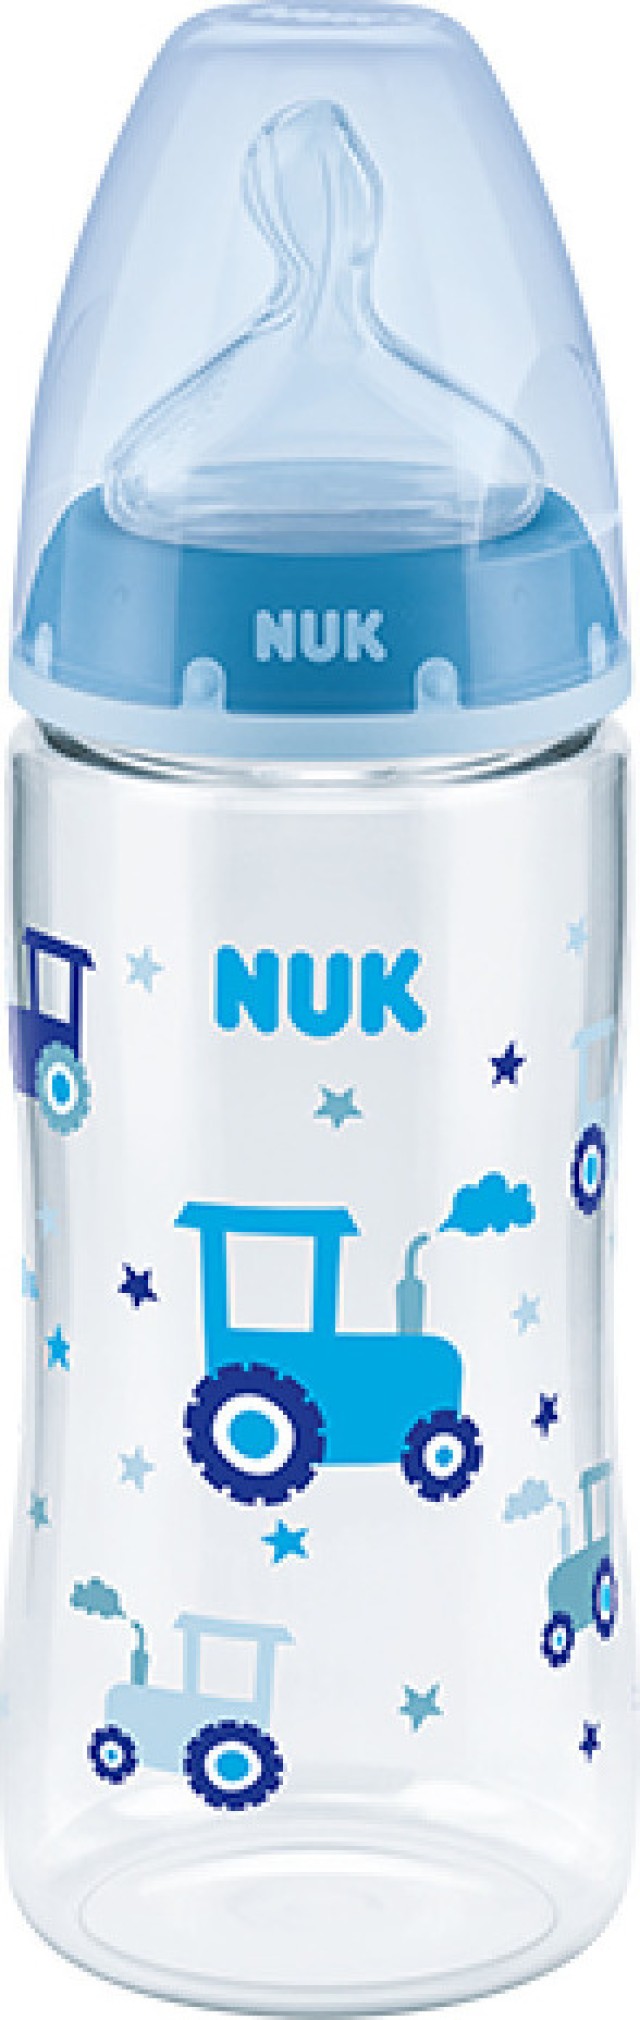 NUK Μπιμπερό Πλαστικό 6-18m First Choice+ Με Θηλή Σιλικόνης & Δείκτη Ελέγχου Θερμοκρασίας Μπλε Με Τρακτέρ (10.741.940), 300ml